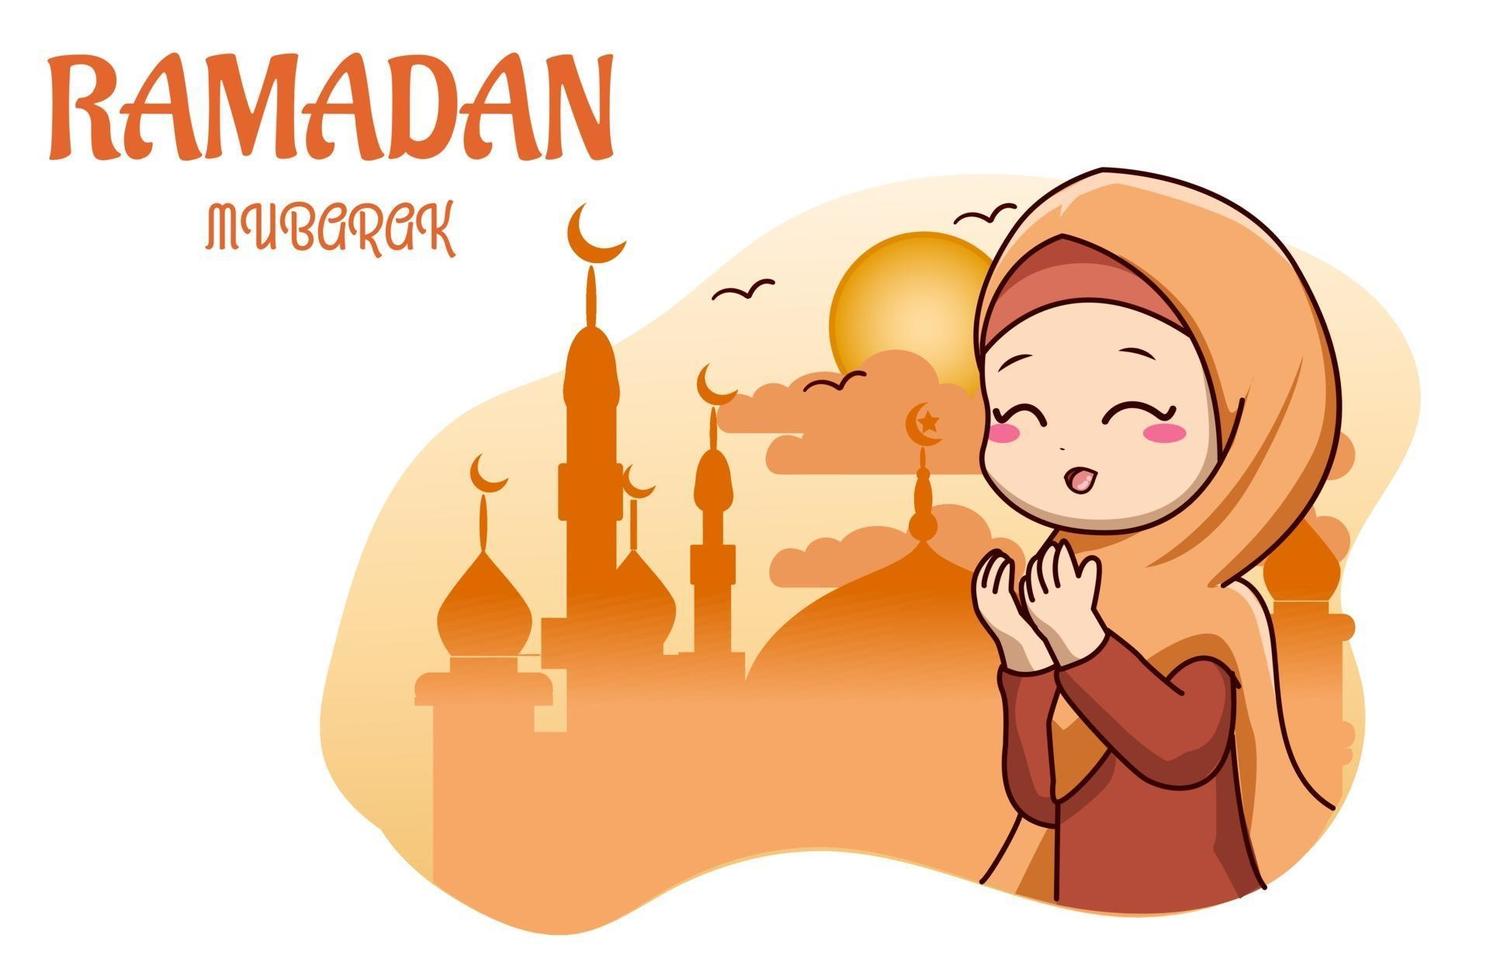 jolie fille musulmane prie dans la mosquée ramadan kareem illustration de dessin animé vecteur